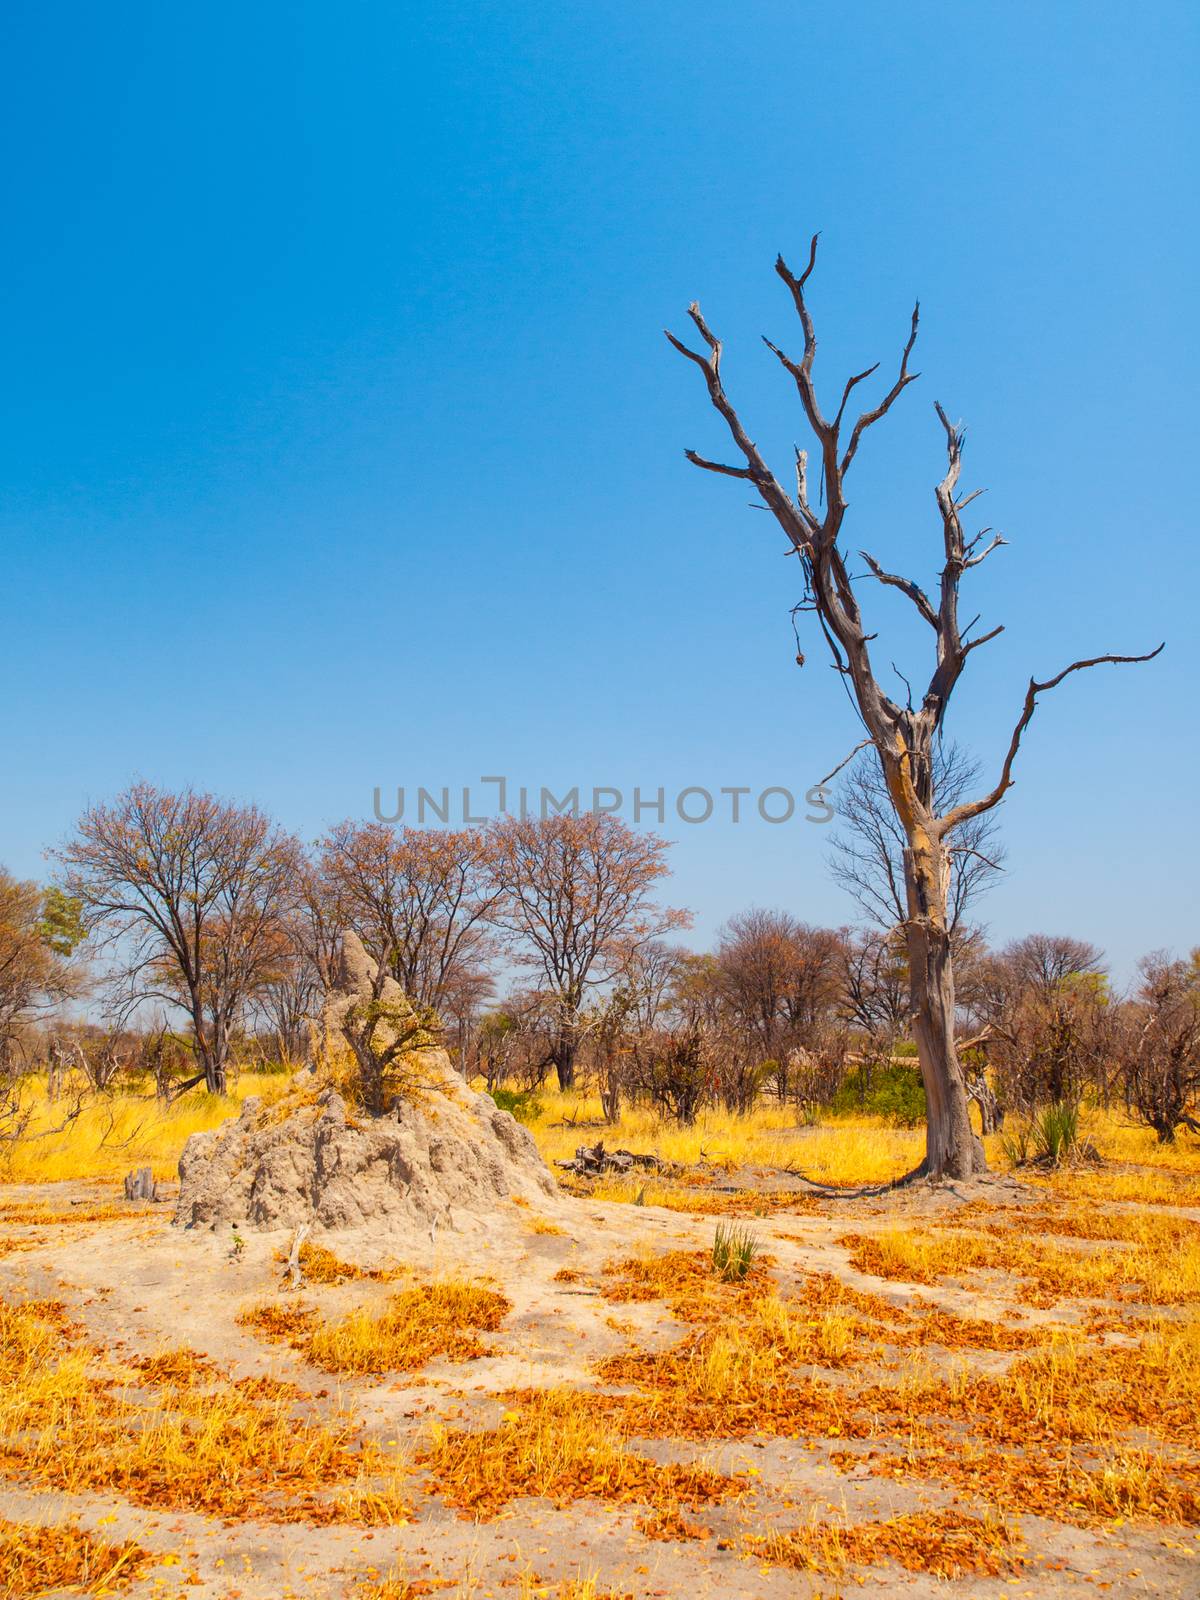 Termite hill in savanna, Okavango region, Botswana